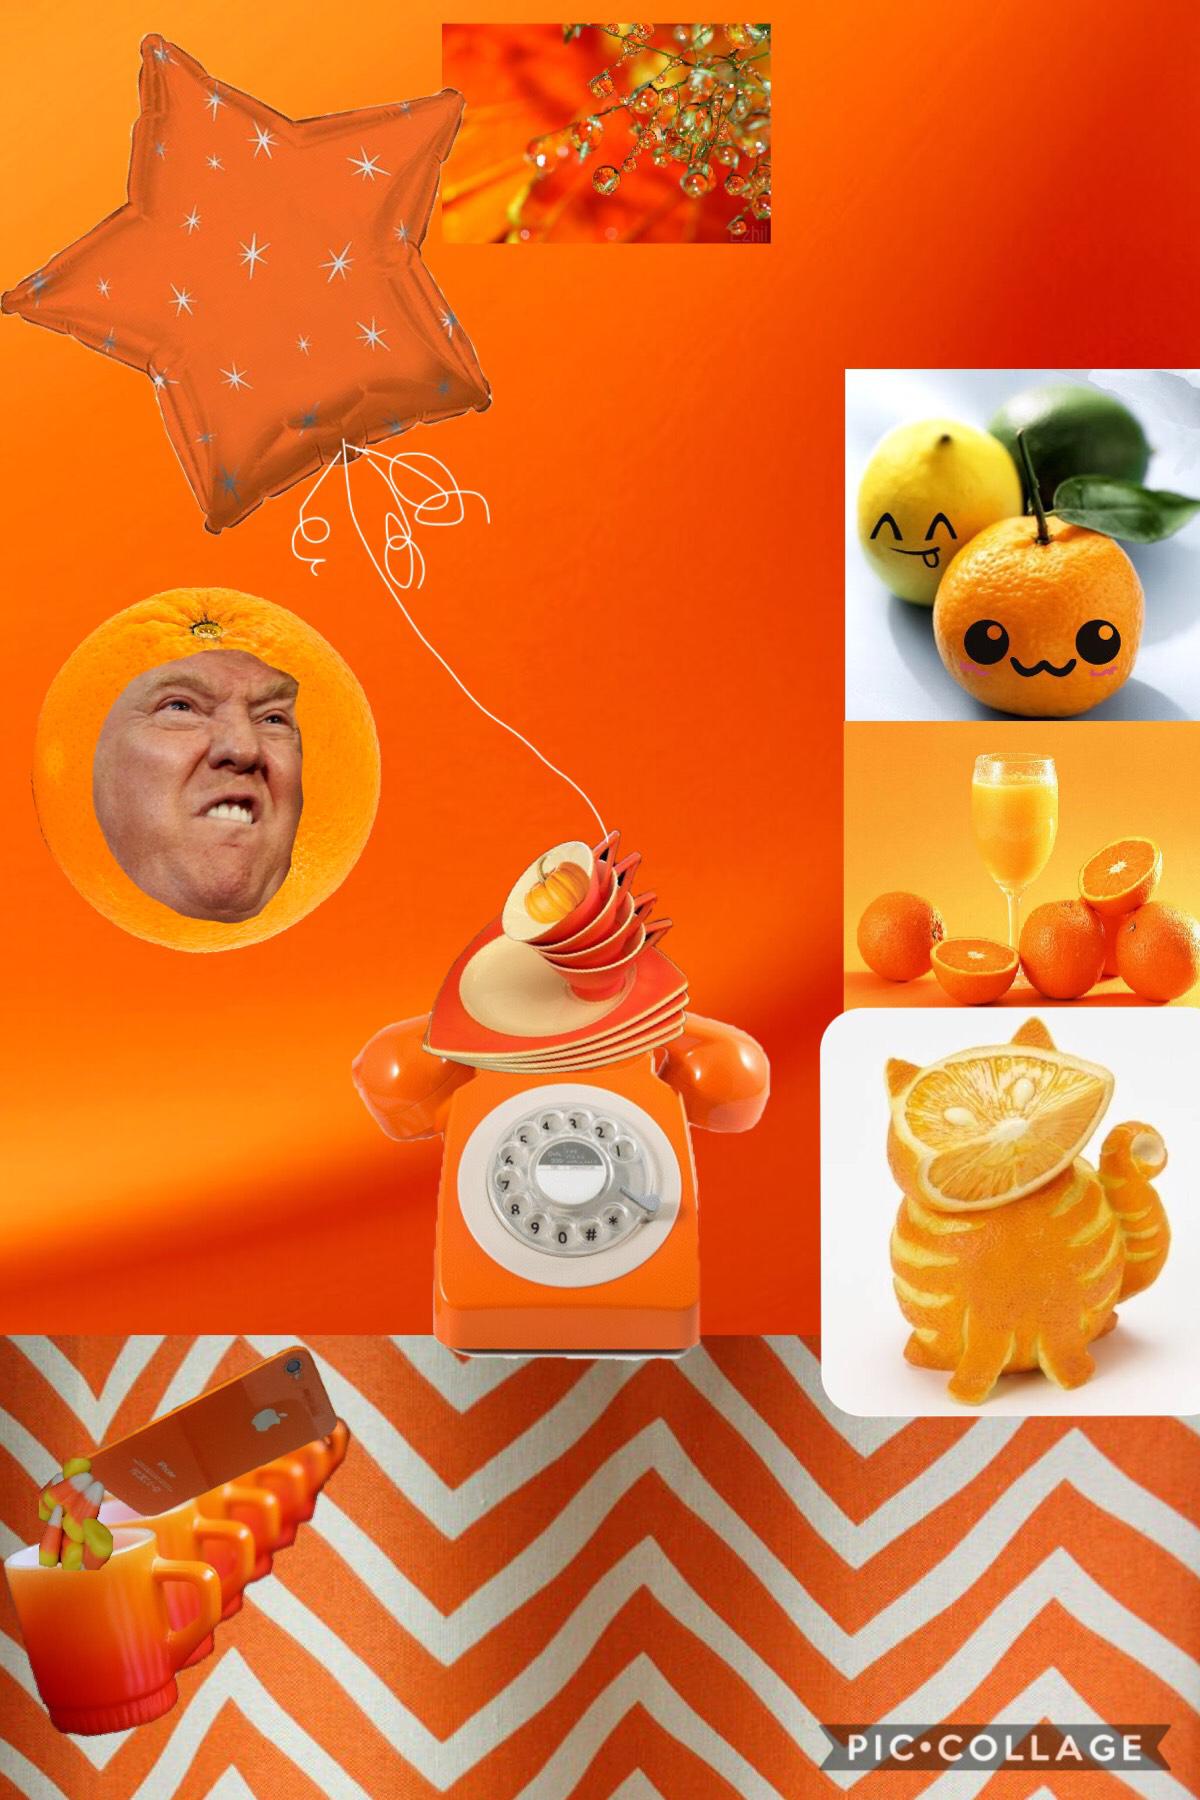 I created an orange collage